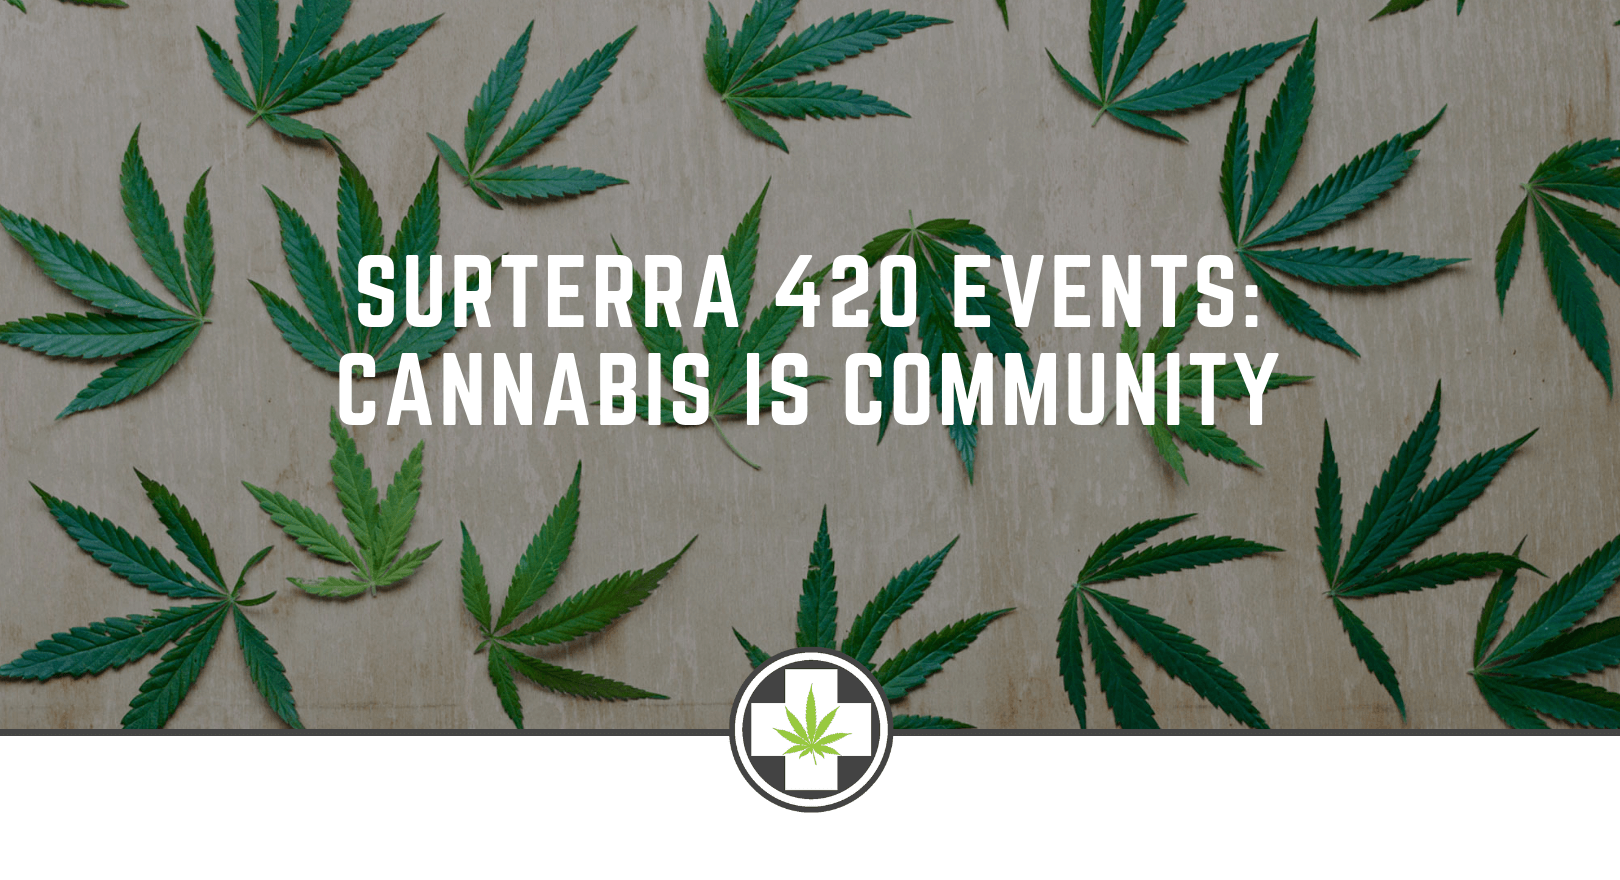 Surterra 420 Events: Cannabis is Community